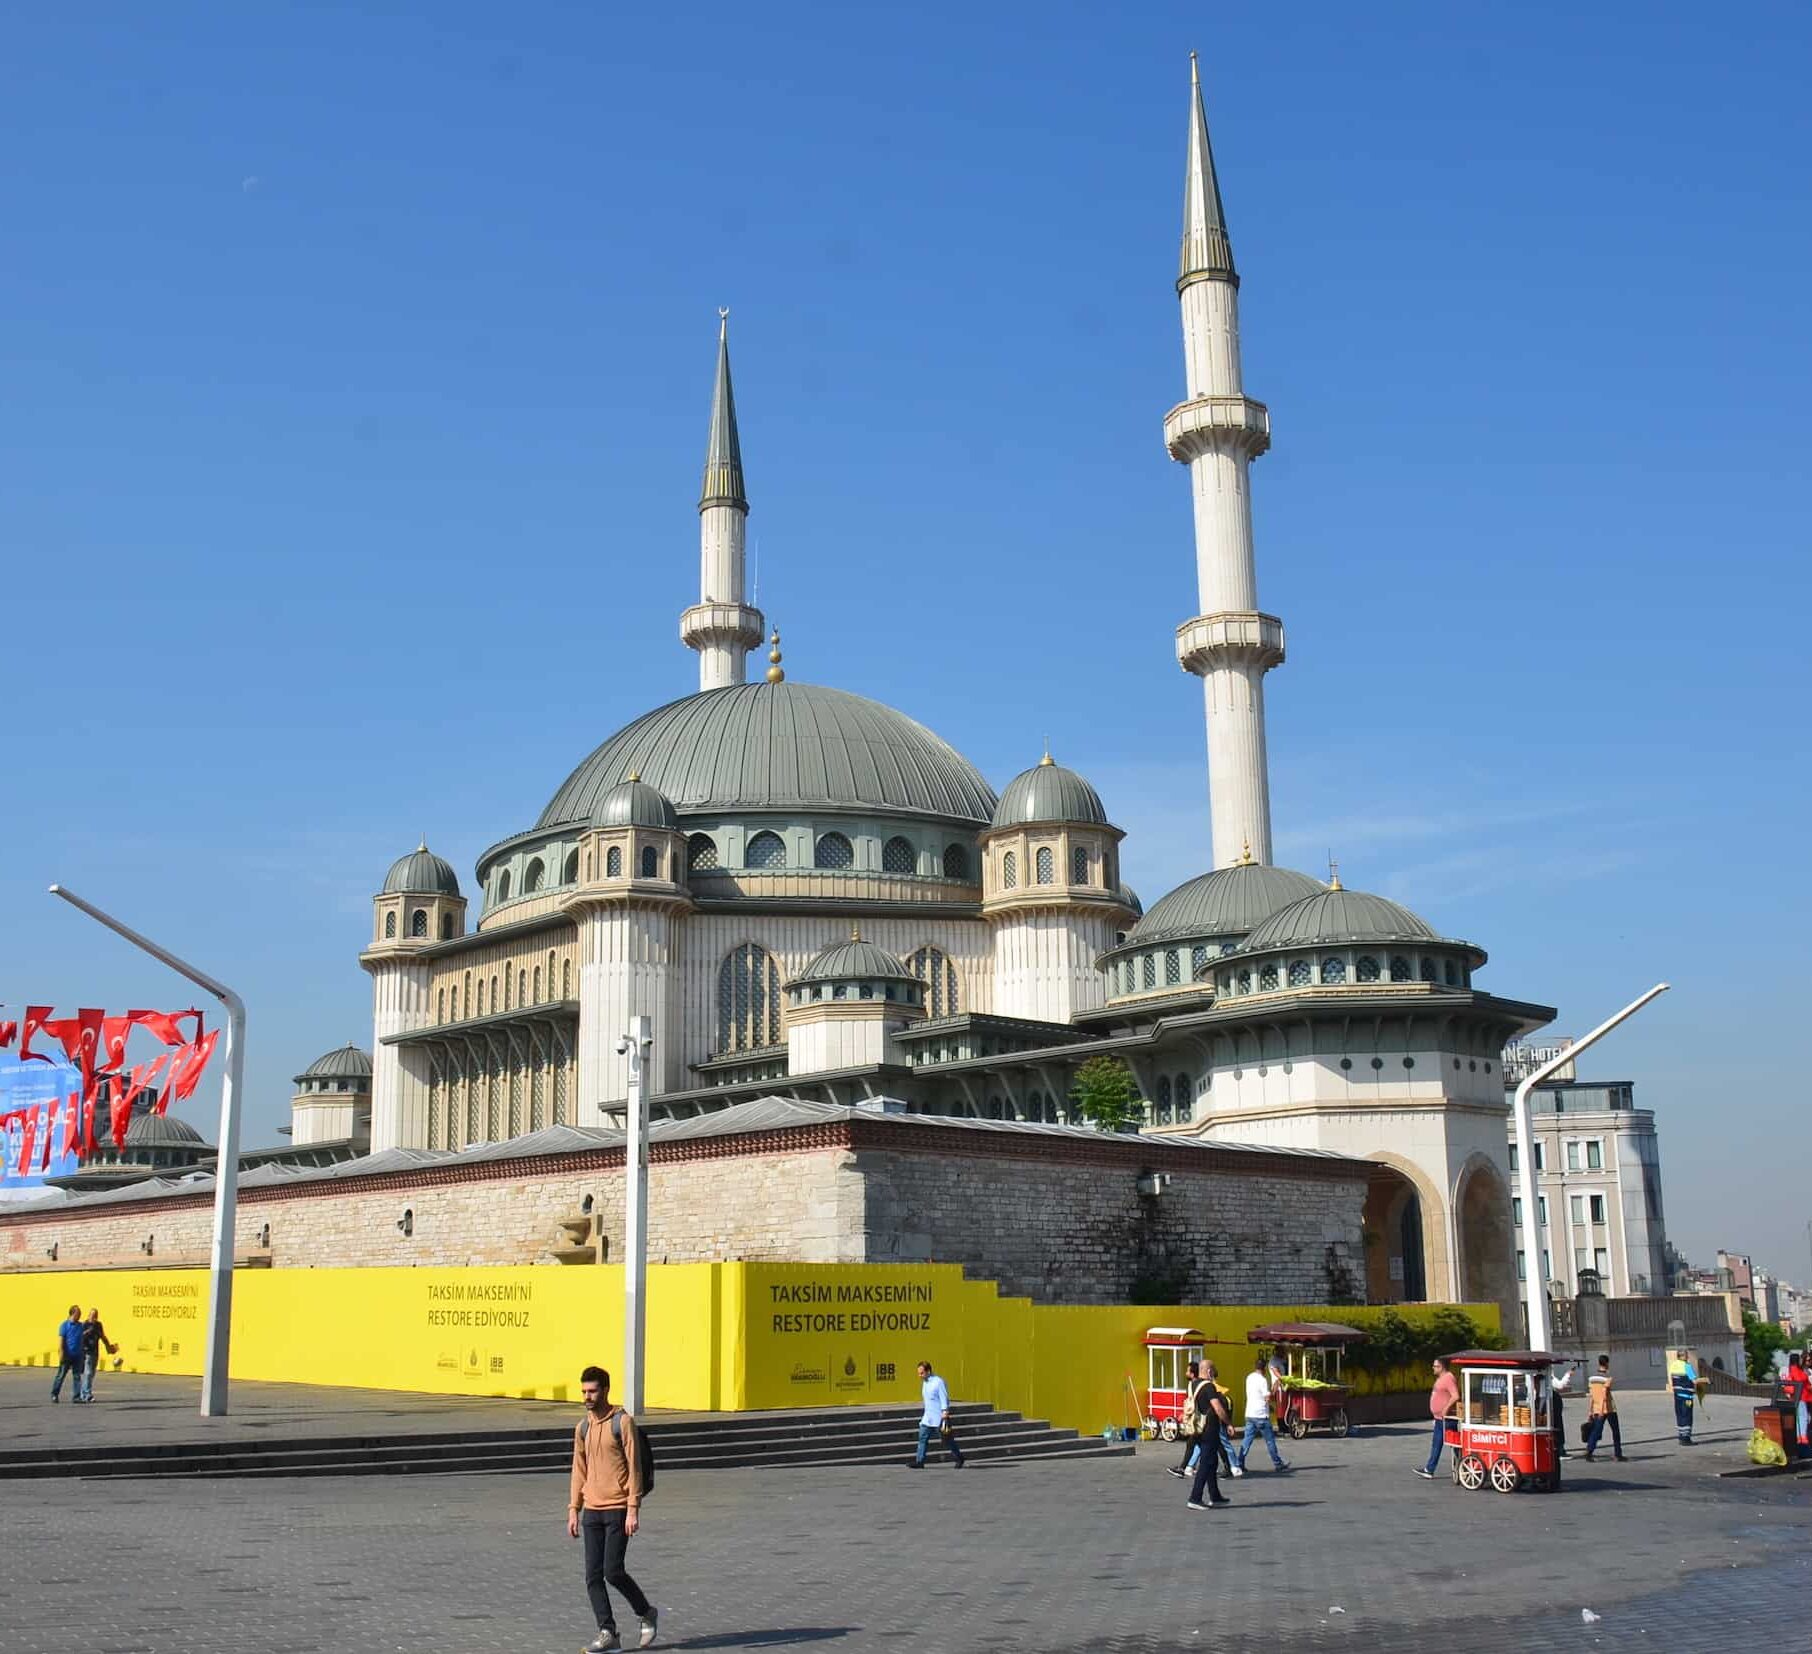 Taksim Mosque on Taksim Square in Istanbul, Turkey